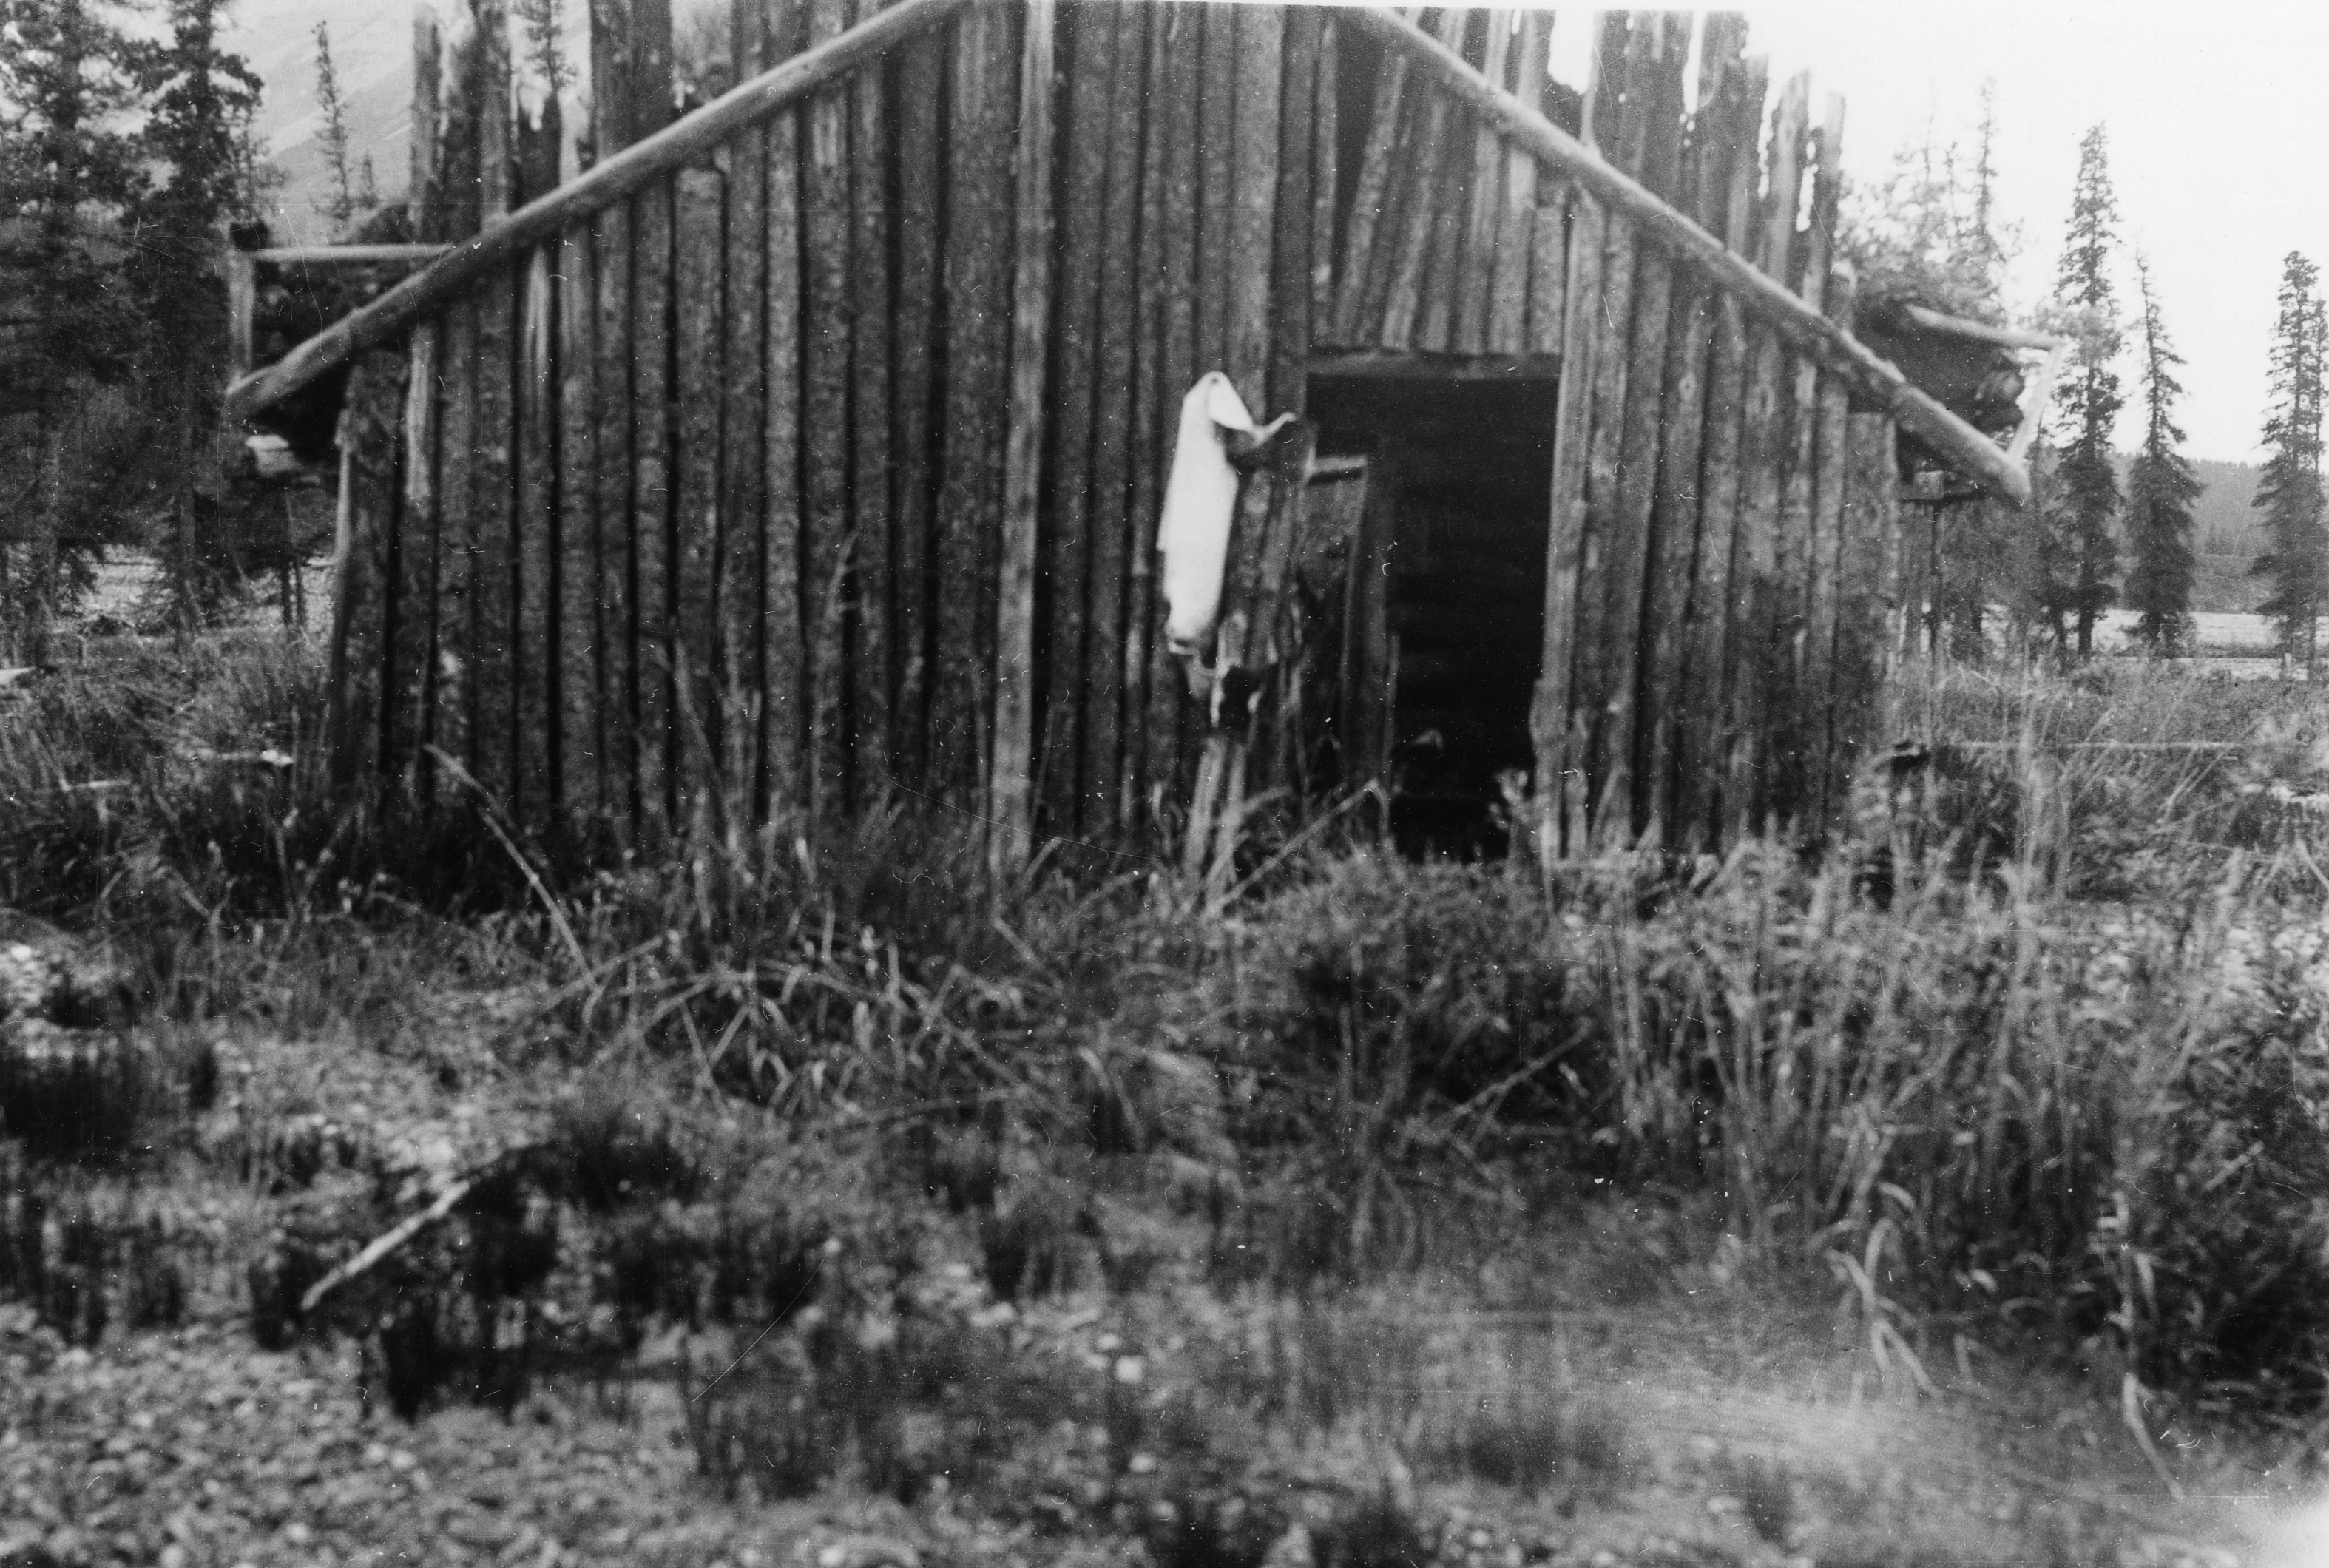 Charles Sheldon's cabin on the Toklat River